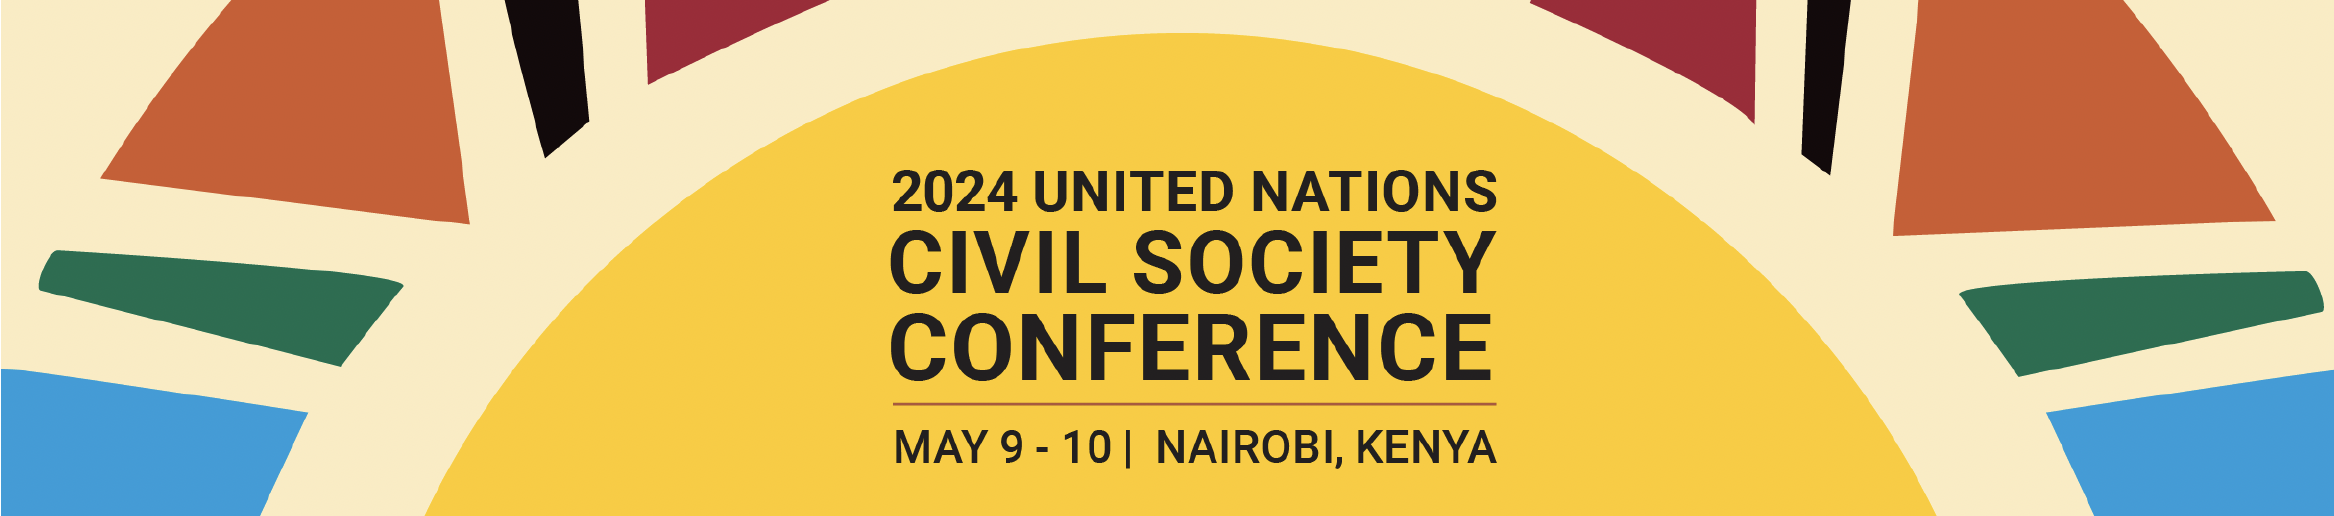 2024 UN Civil Society Conference logo website header